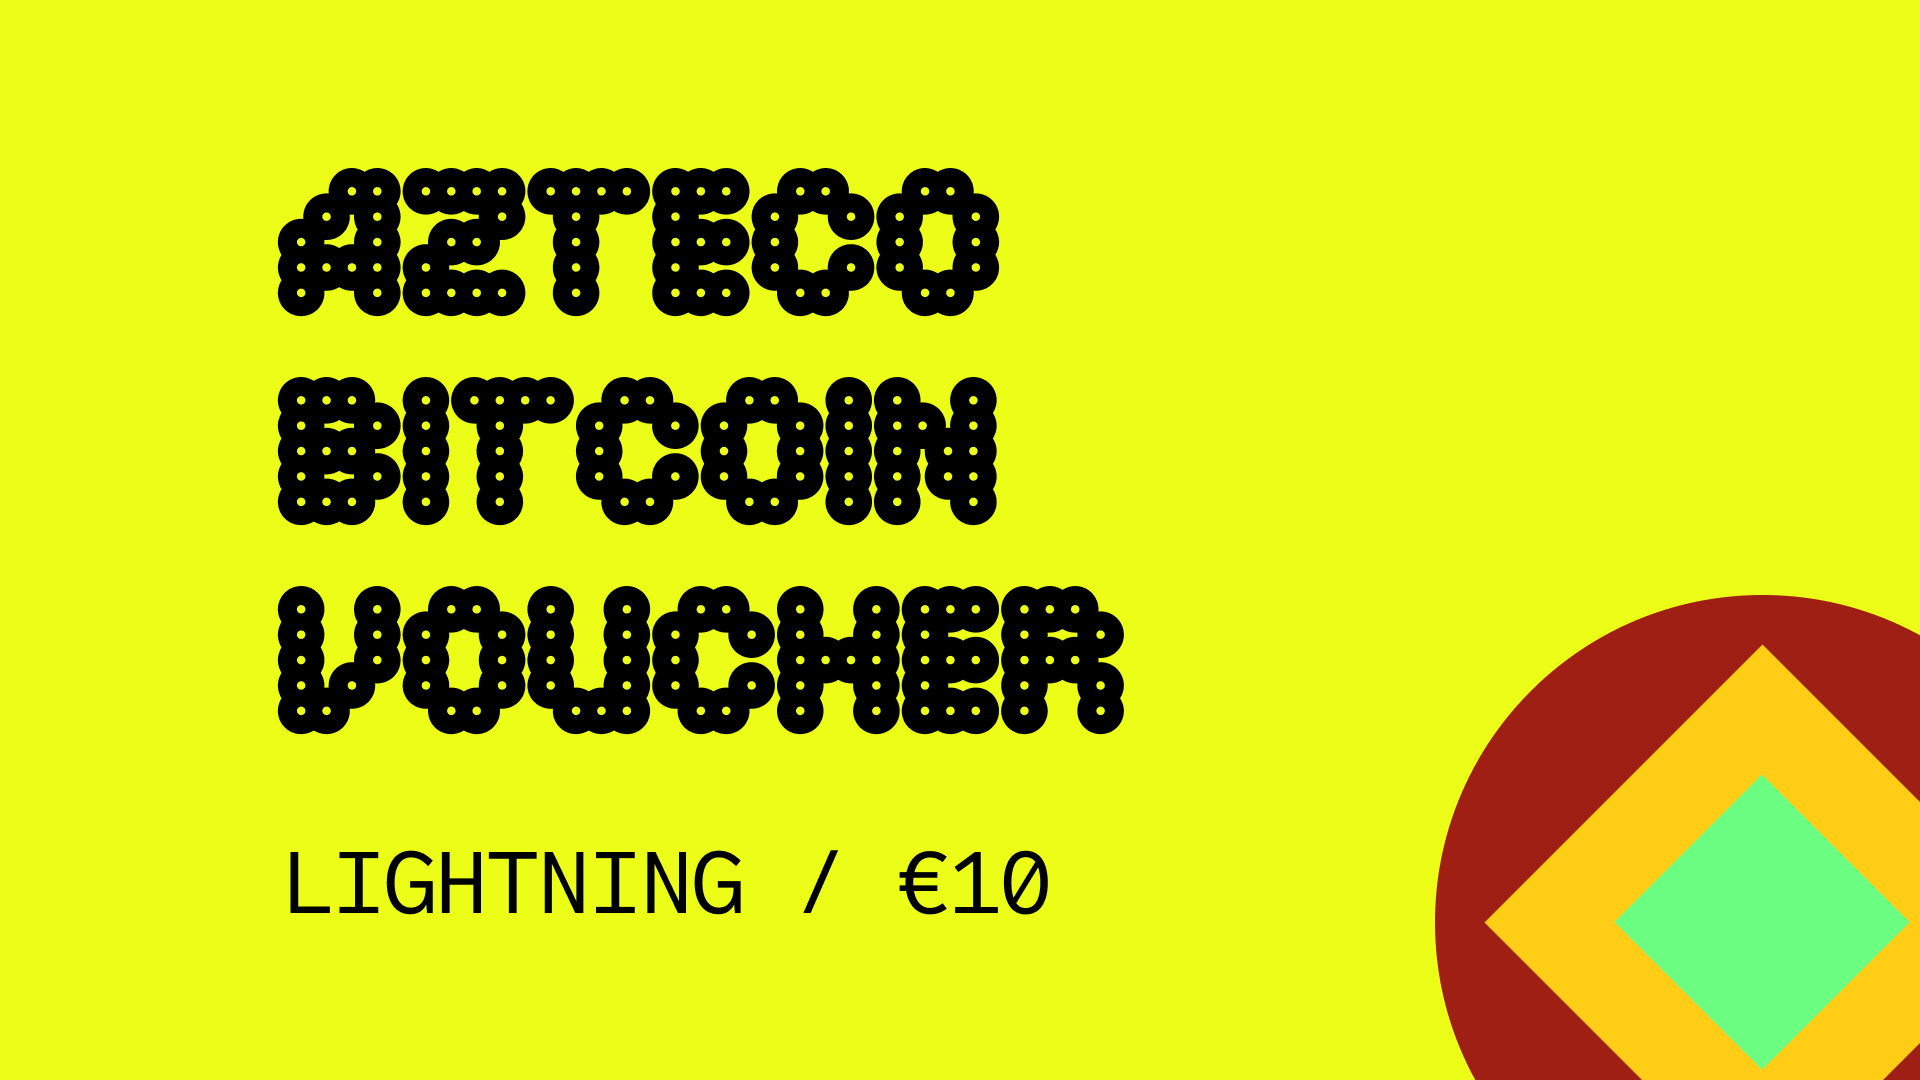 Azteco Bitcoin Lighting €10 Voucher, 11.3 usd